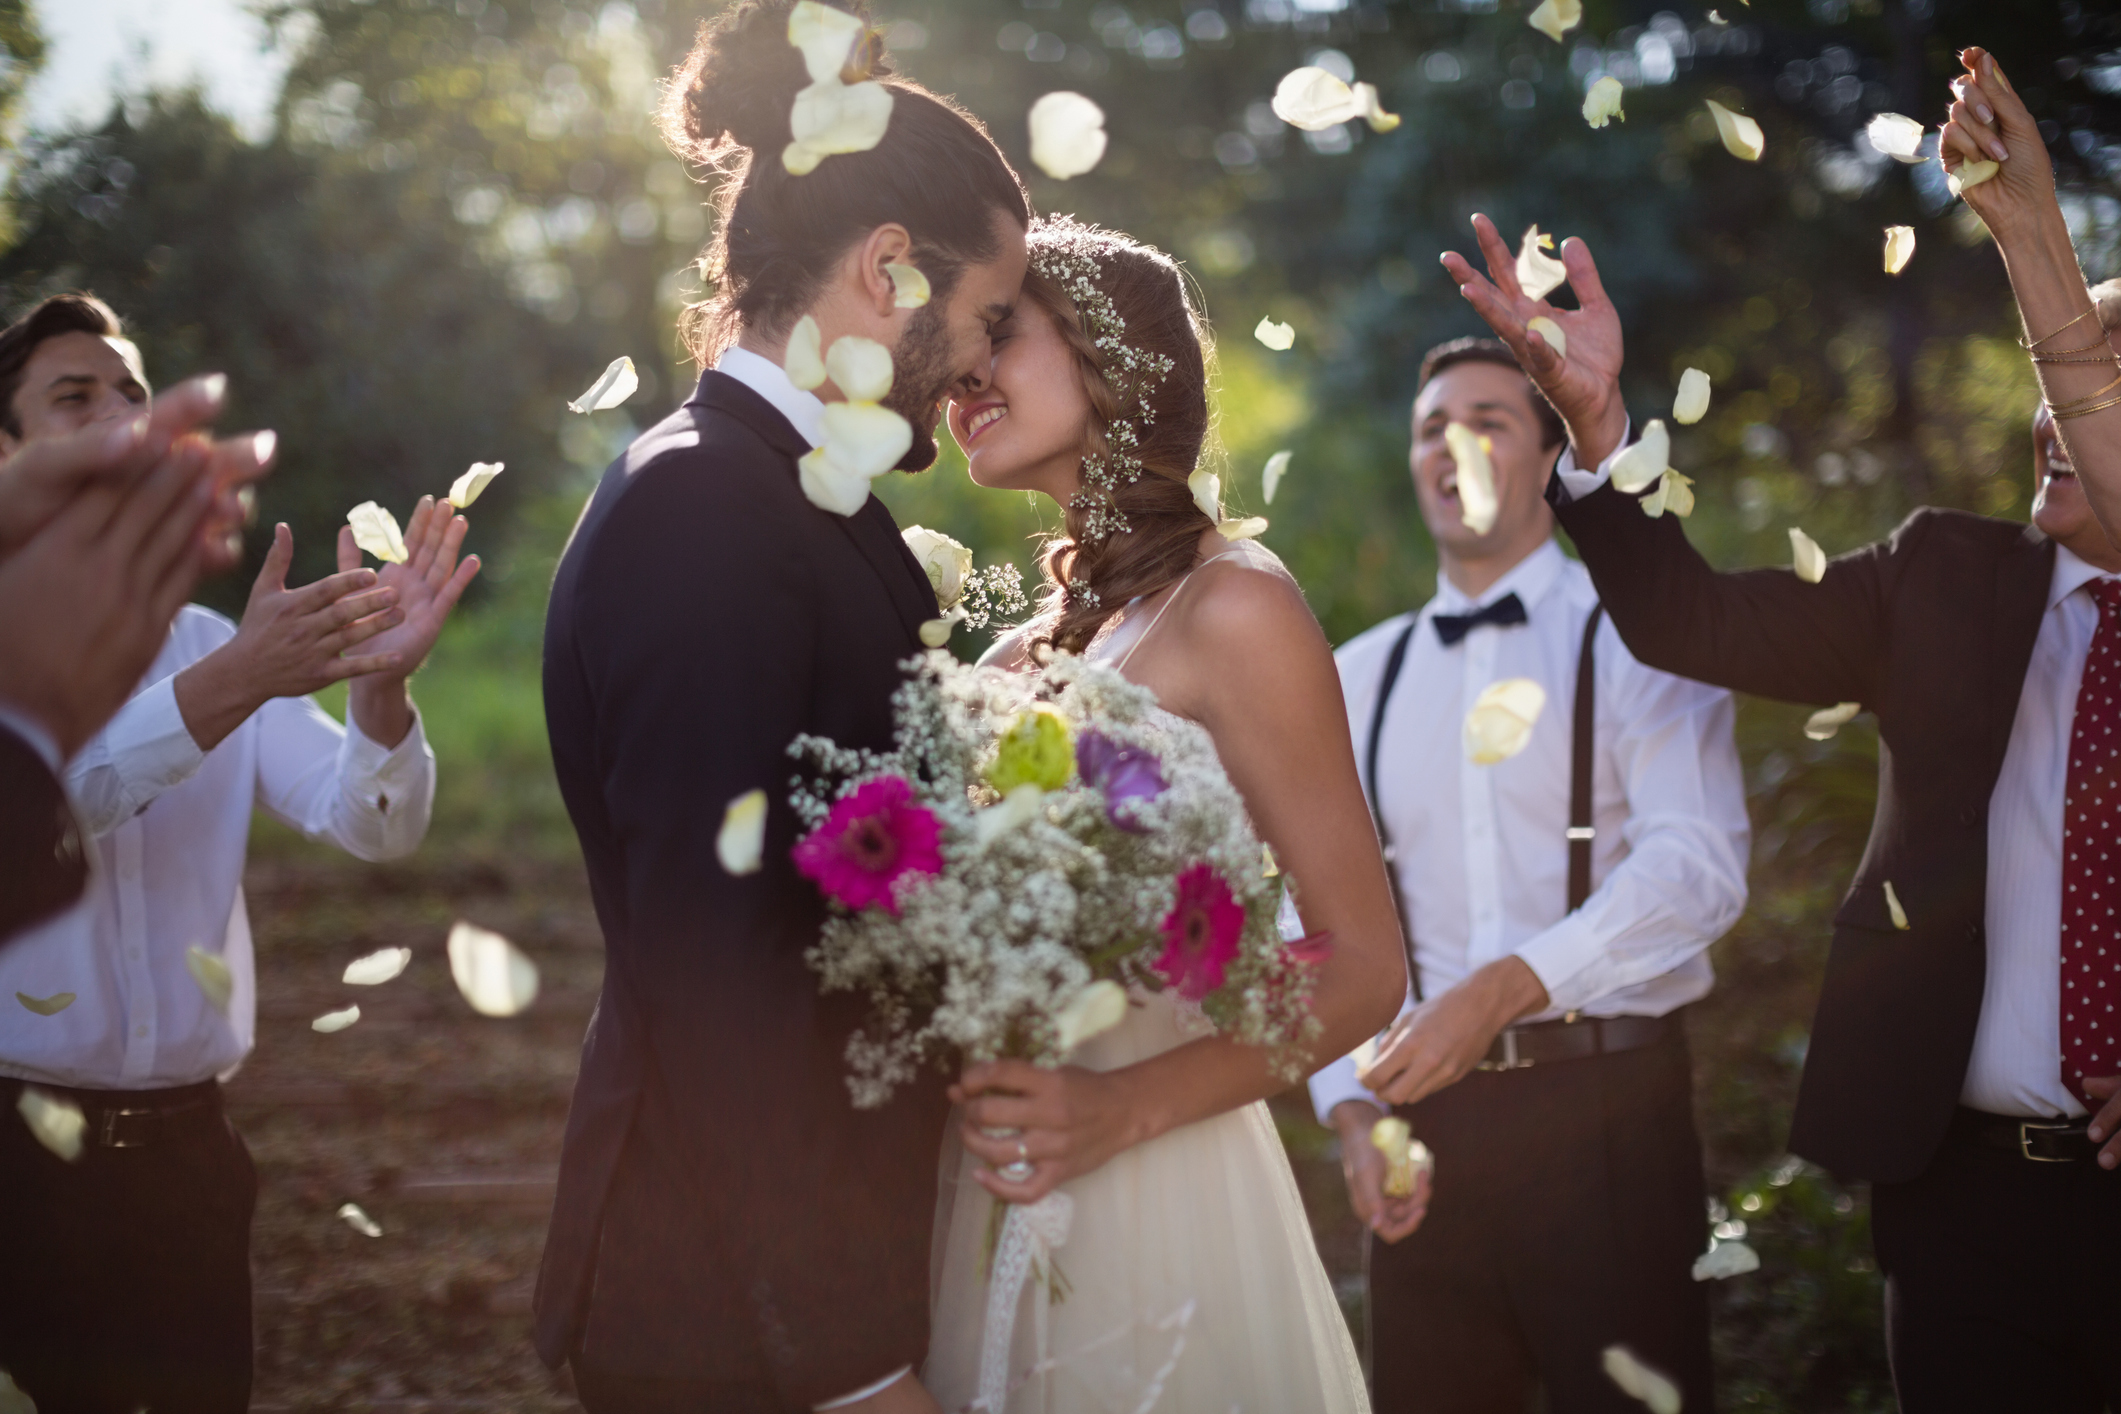 site γνωριμιών με το υψηλότερο ποσοστό γάμου